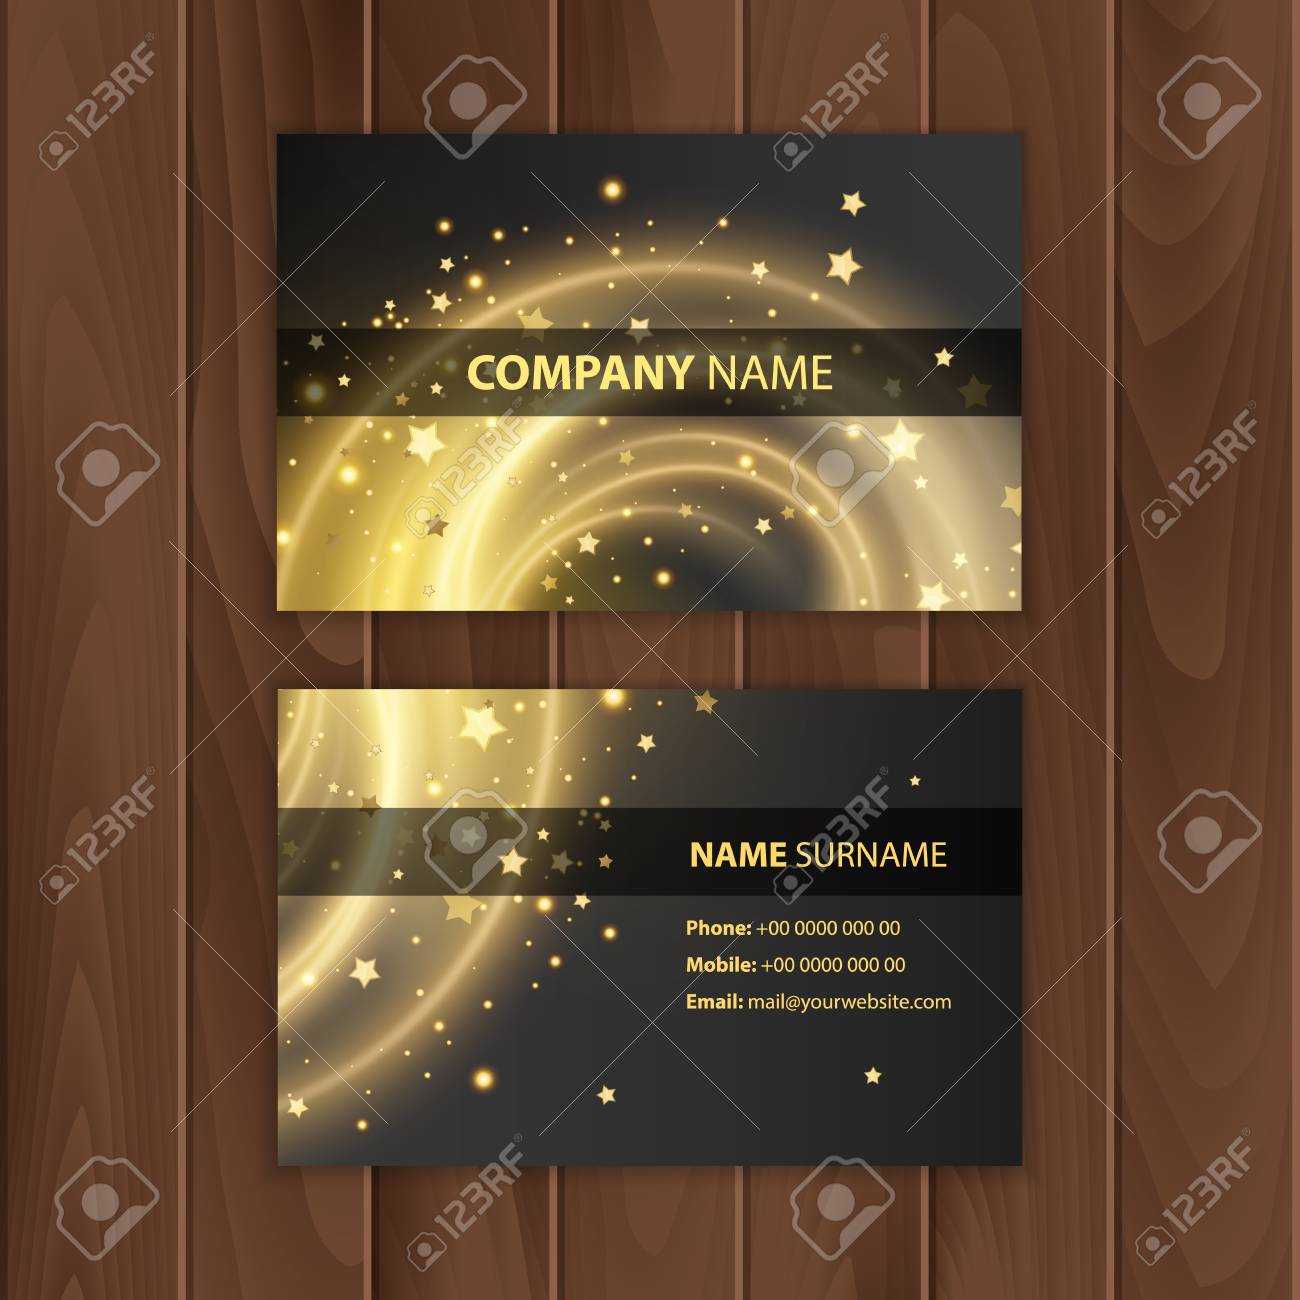 Dark Modern Business Card Design Template With Modern Business Card Design Templates